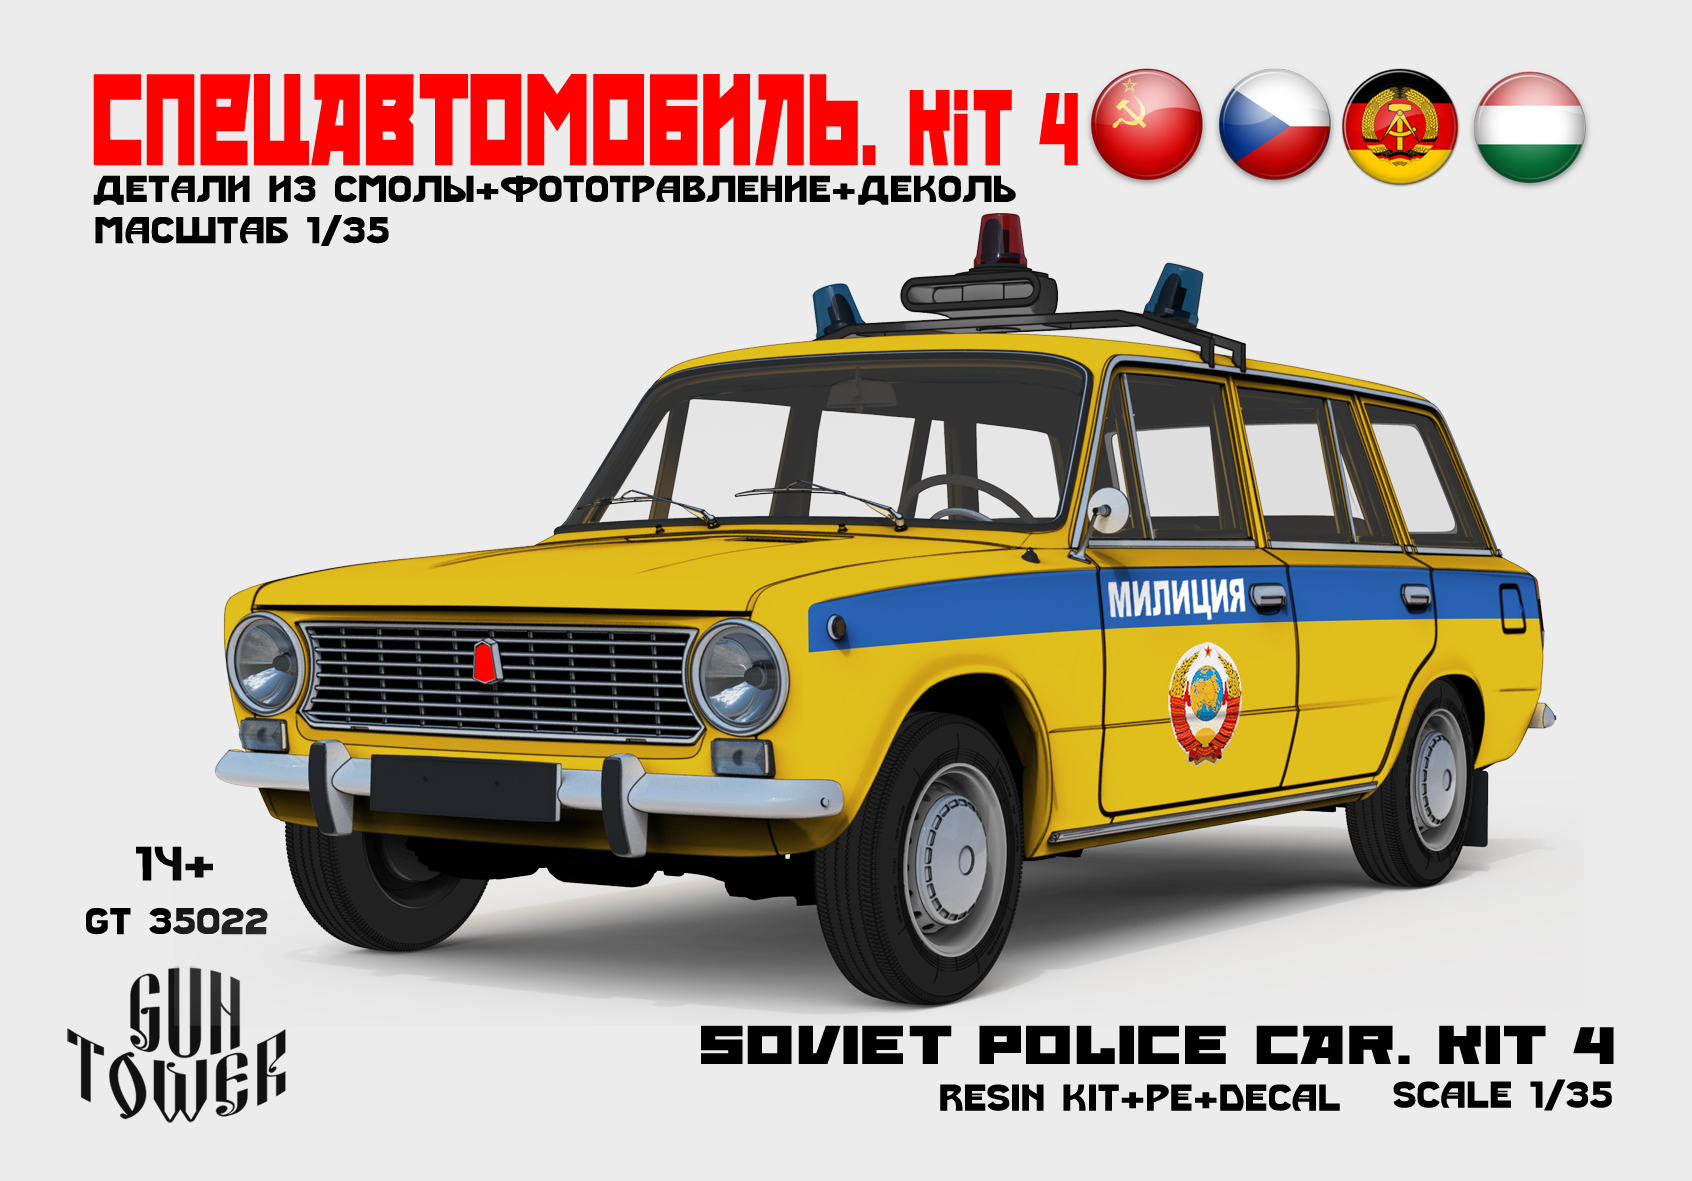 Soviet police car.Kit 4 (2102)